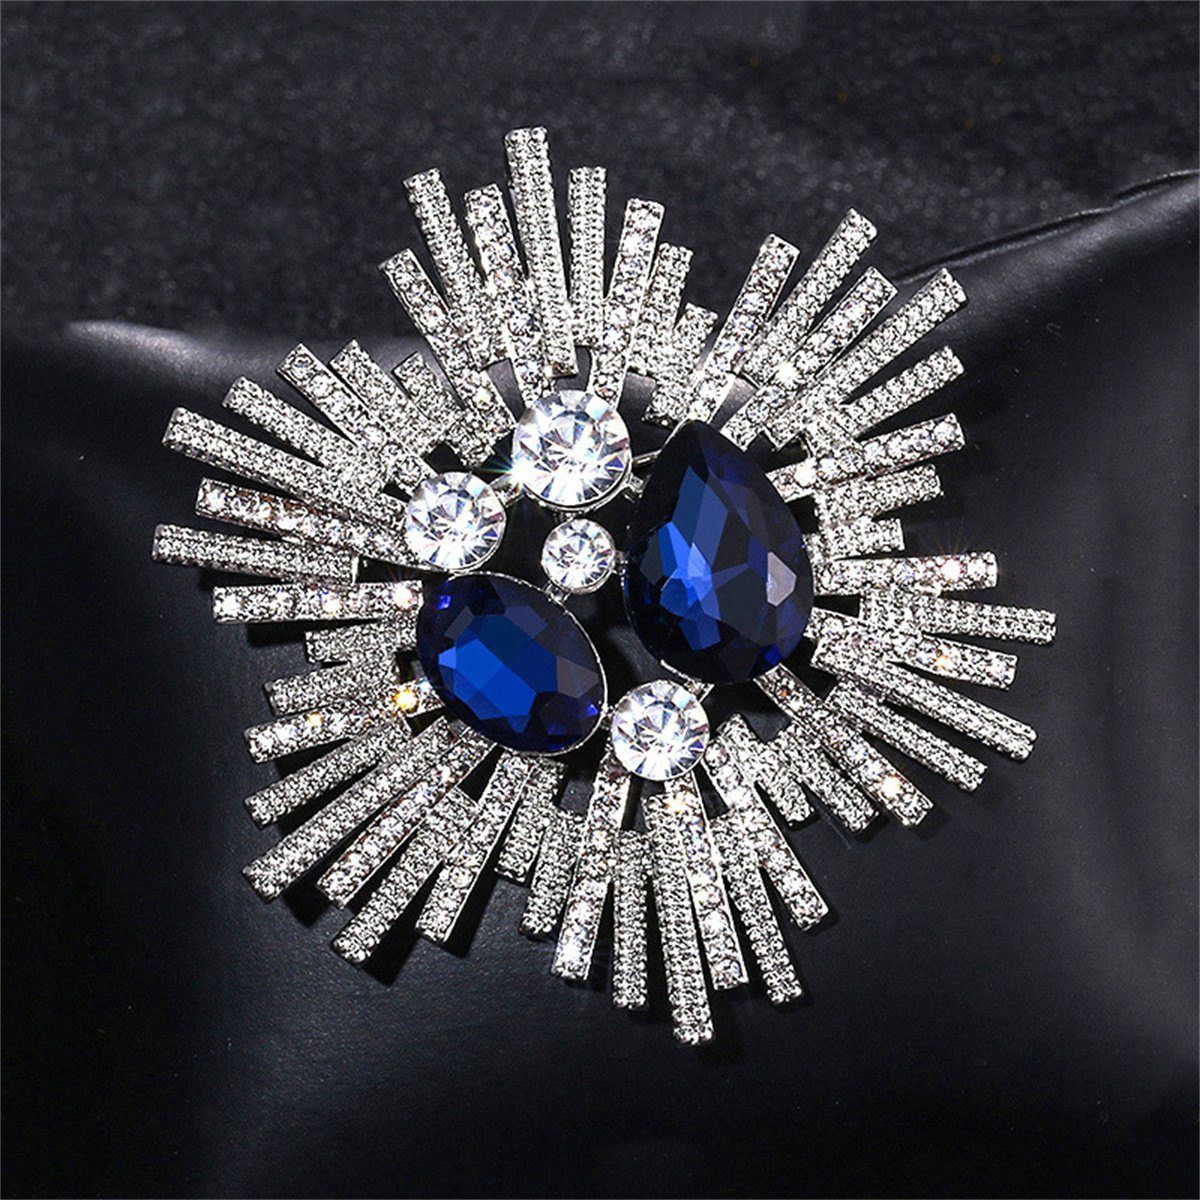 mit Exquisite in carefully Brosche Vintage-Brosche Feuerwerksform, Zirkonia Blau selected besetzt